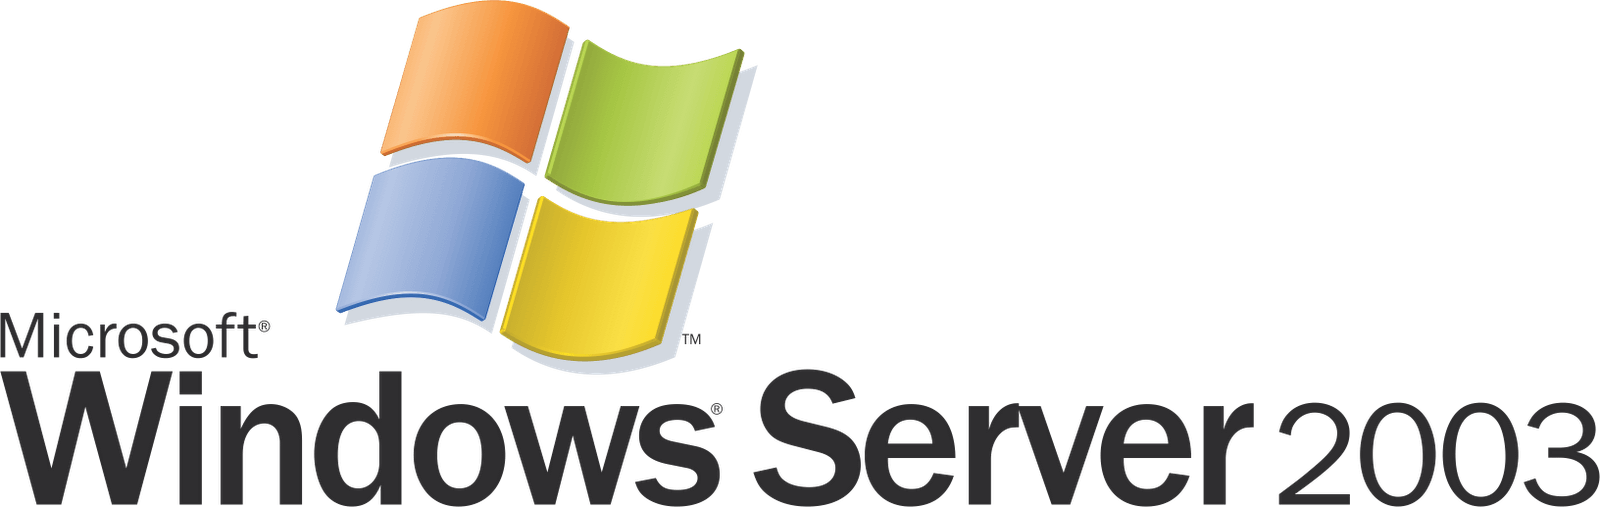 Windows Server 2003 Logo - Windows Server 2003 Logo Image Logo Png